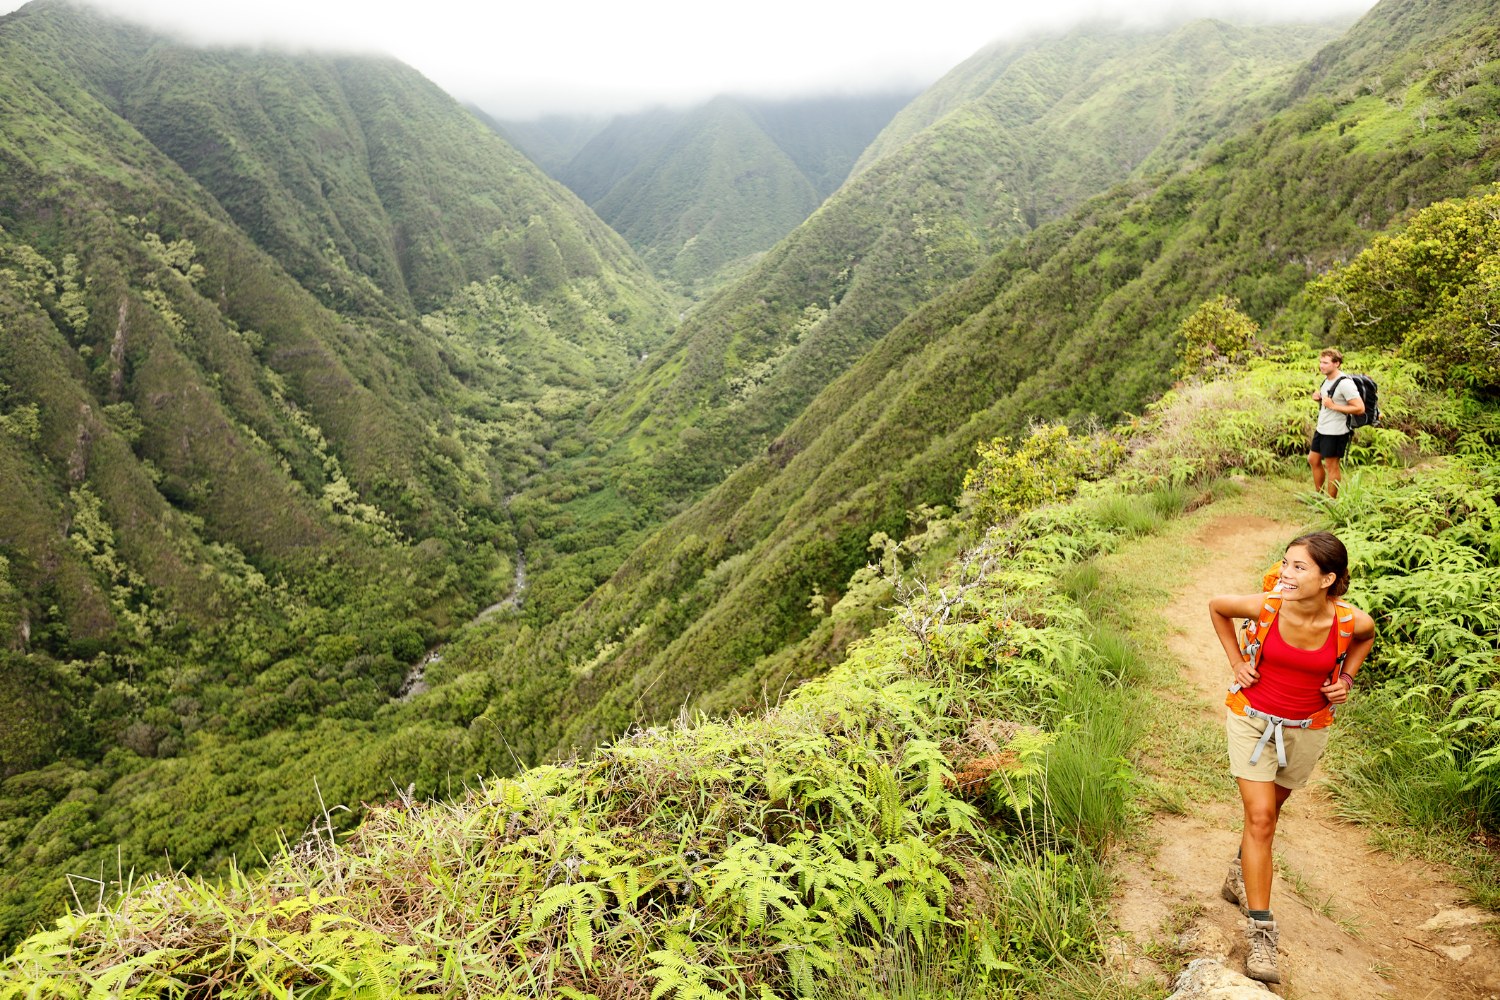 a man and woman hiking along the steep and rugged terrain near pu uka oku falls